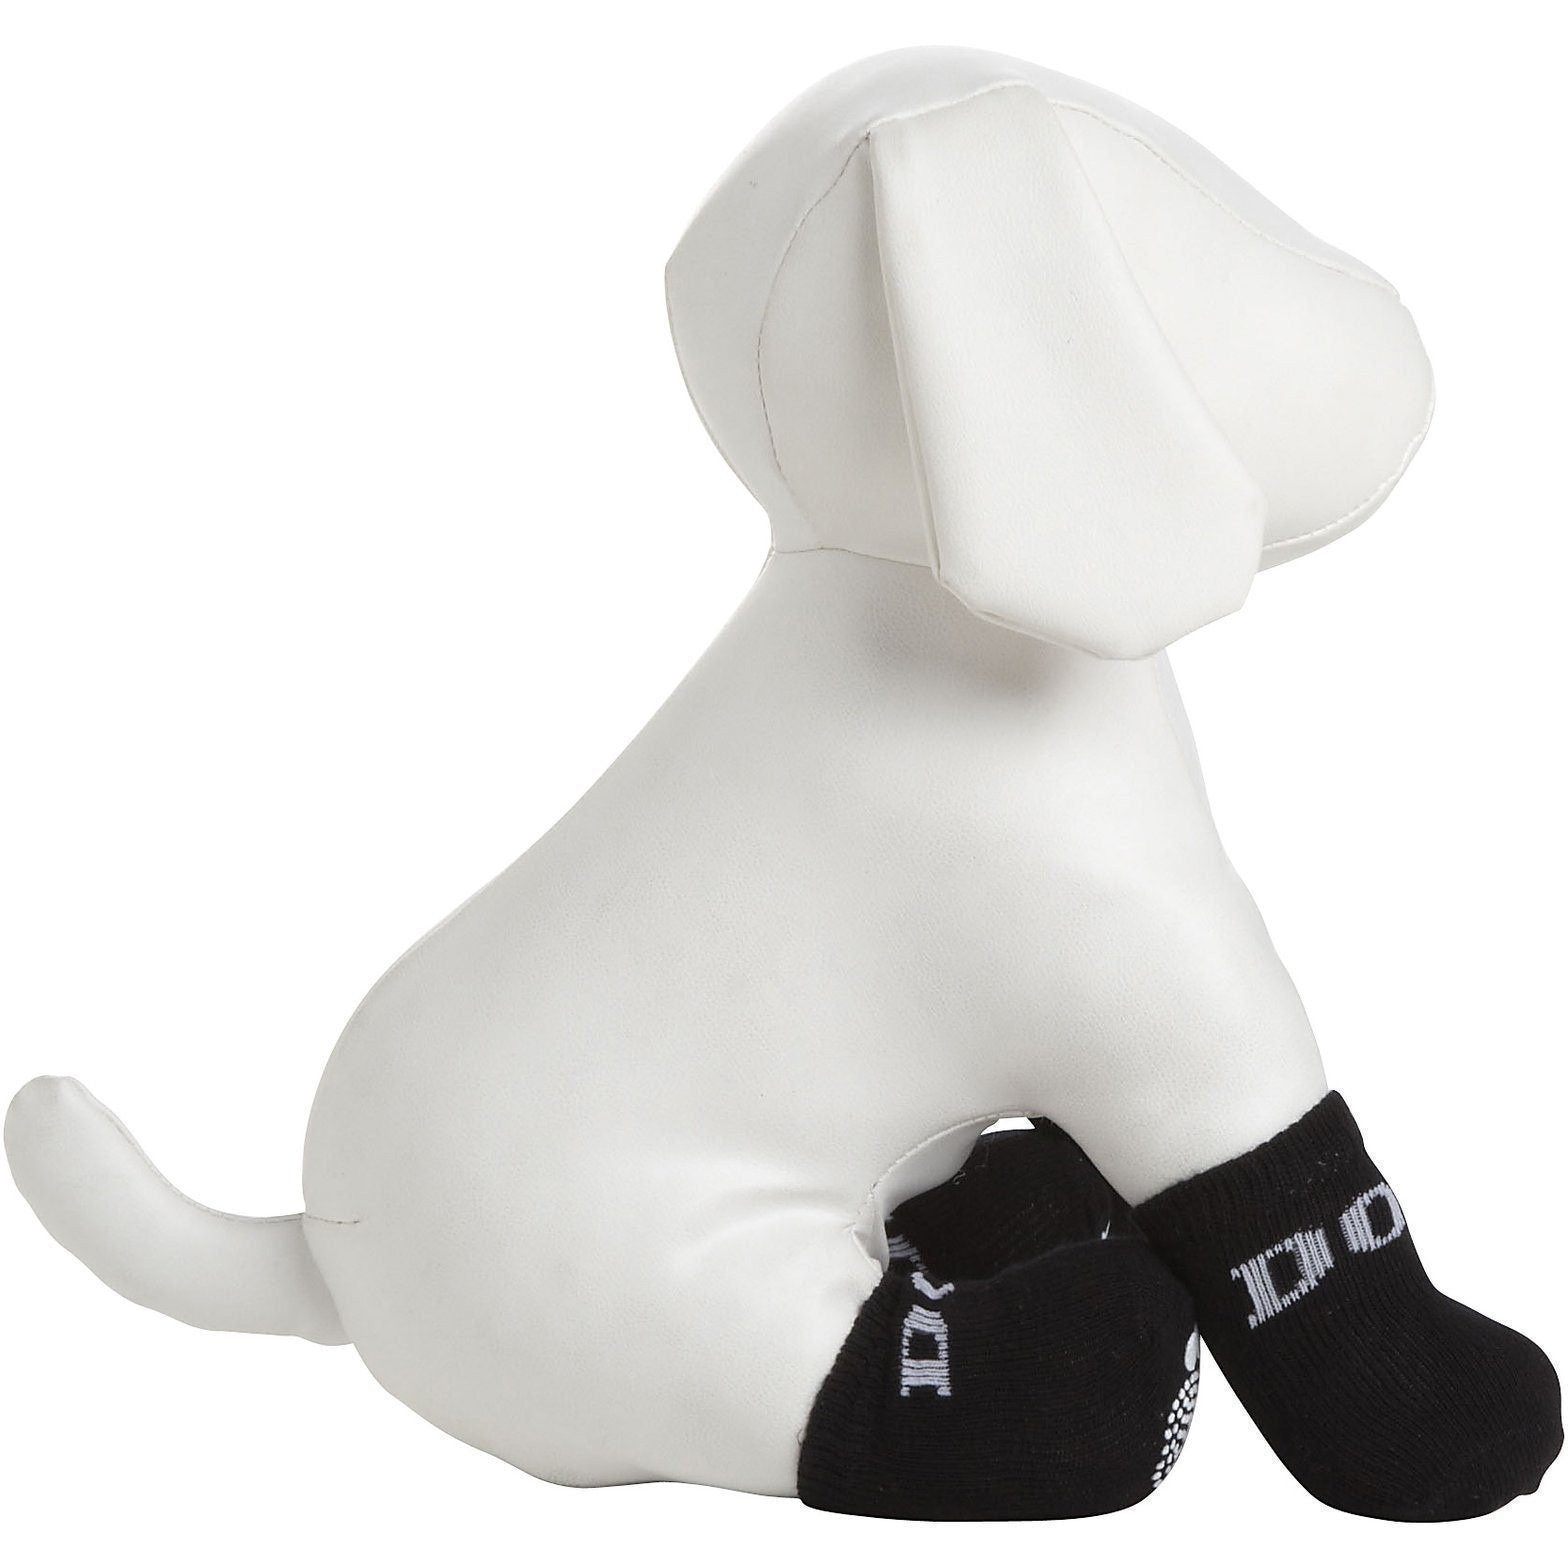 Pet Life ® Anti-Slip Rubberized Gripped Breathable Stretch Pet Dog Socks - Set of 4  